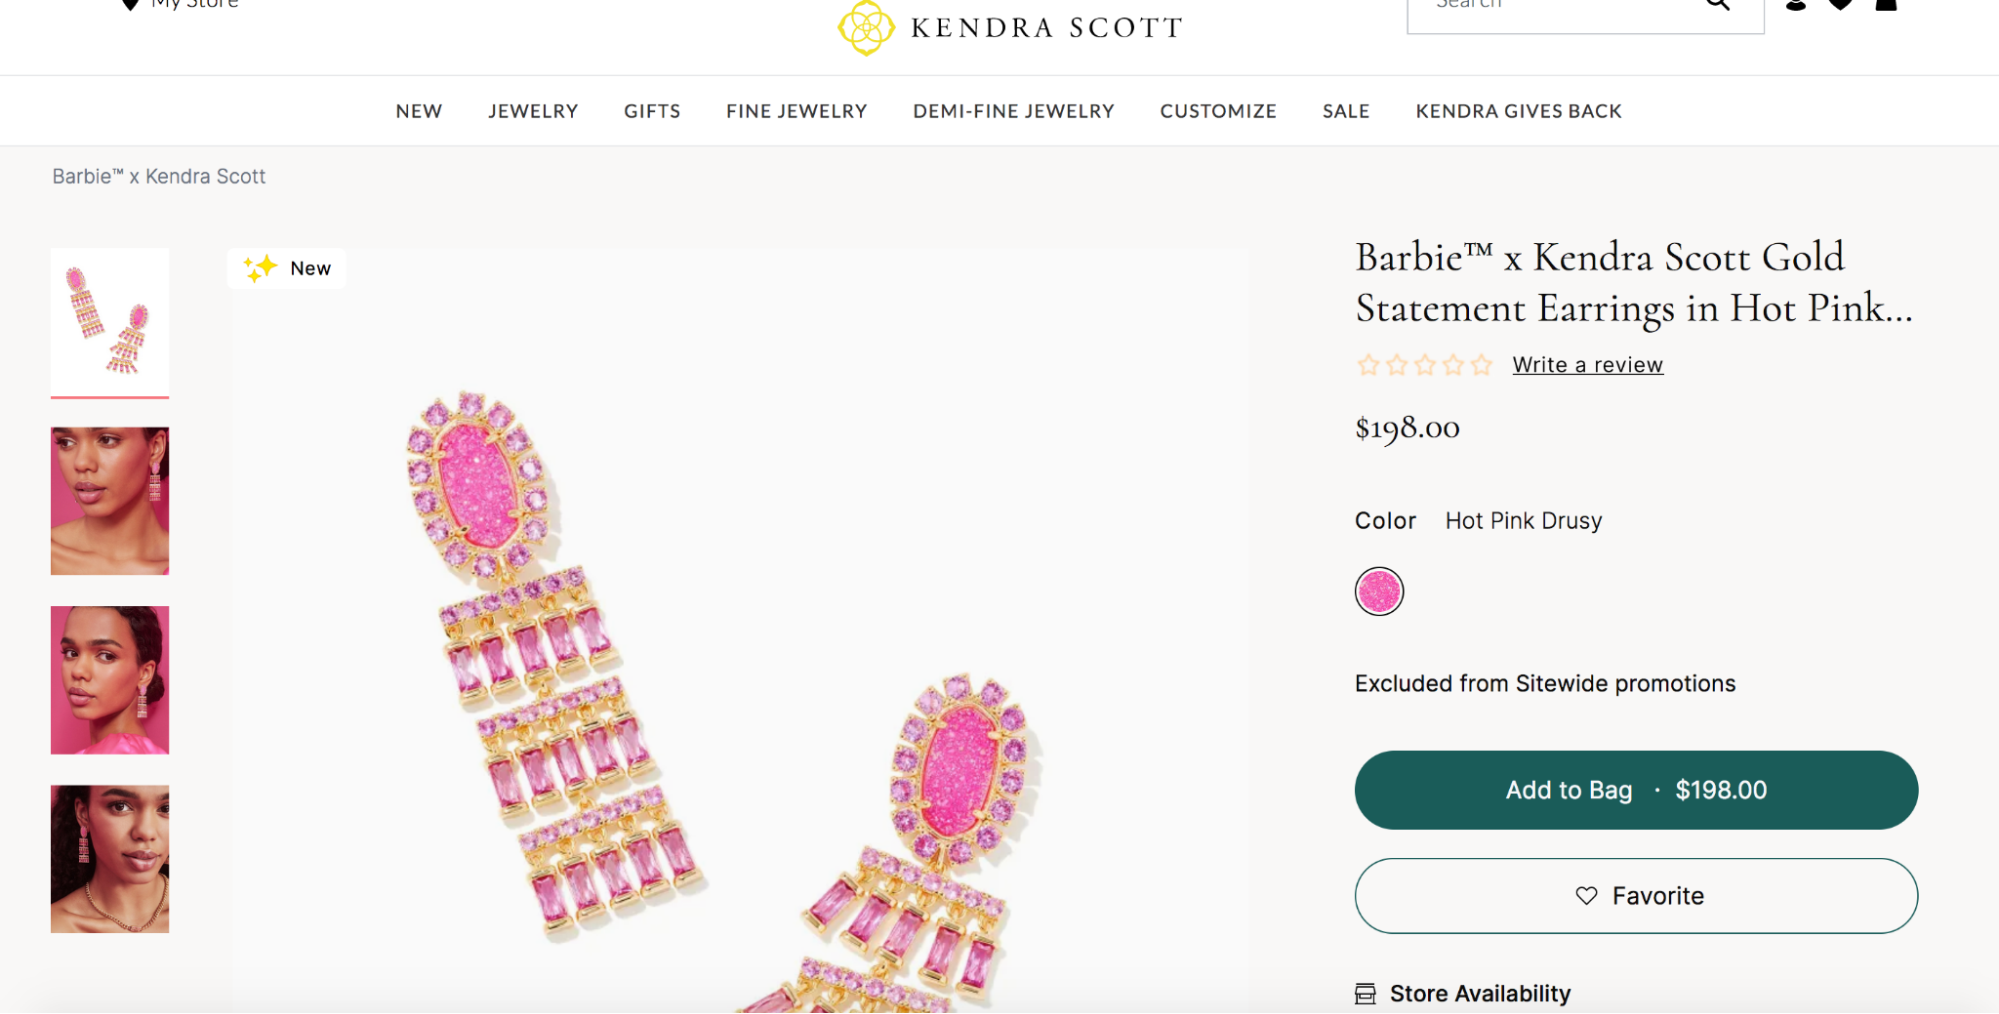 Kendra Scott x Barbie Collaboration. Image from Kendra Scott website.